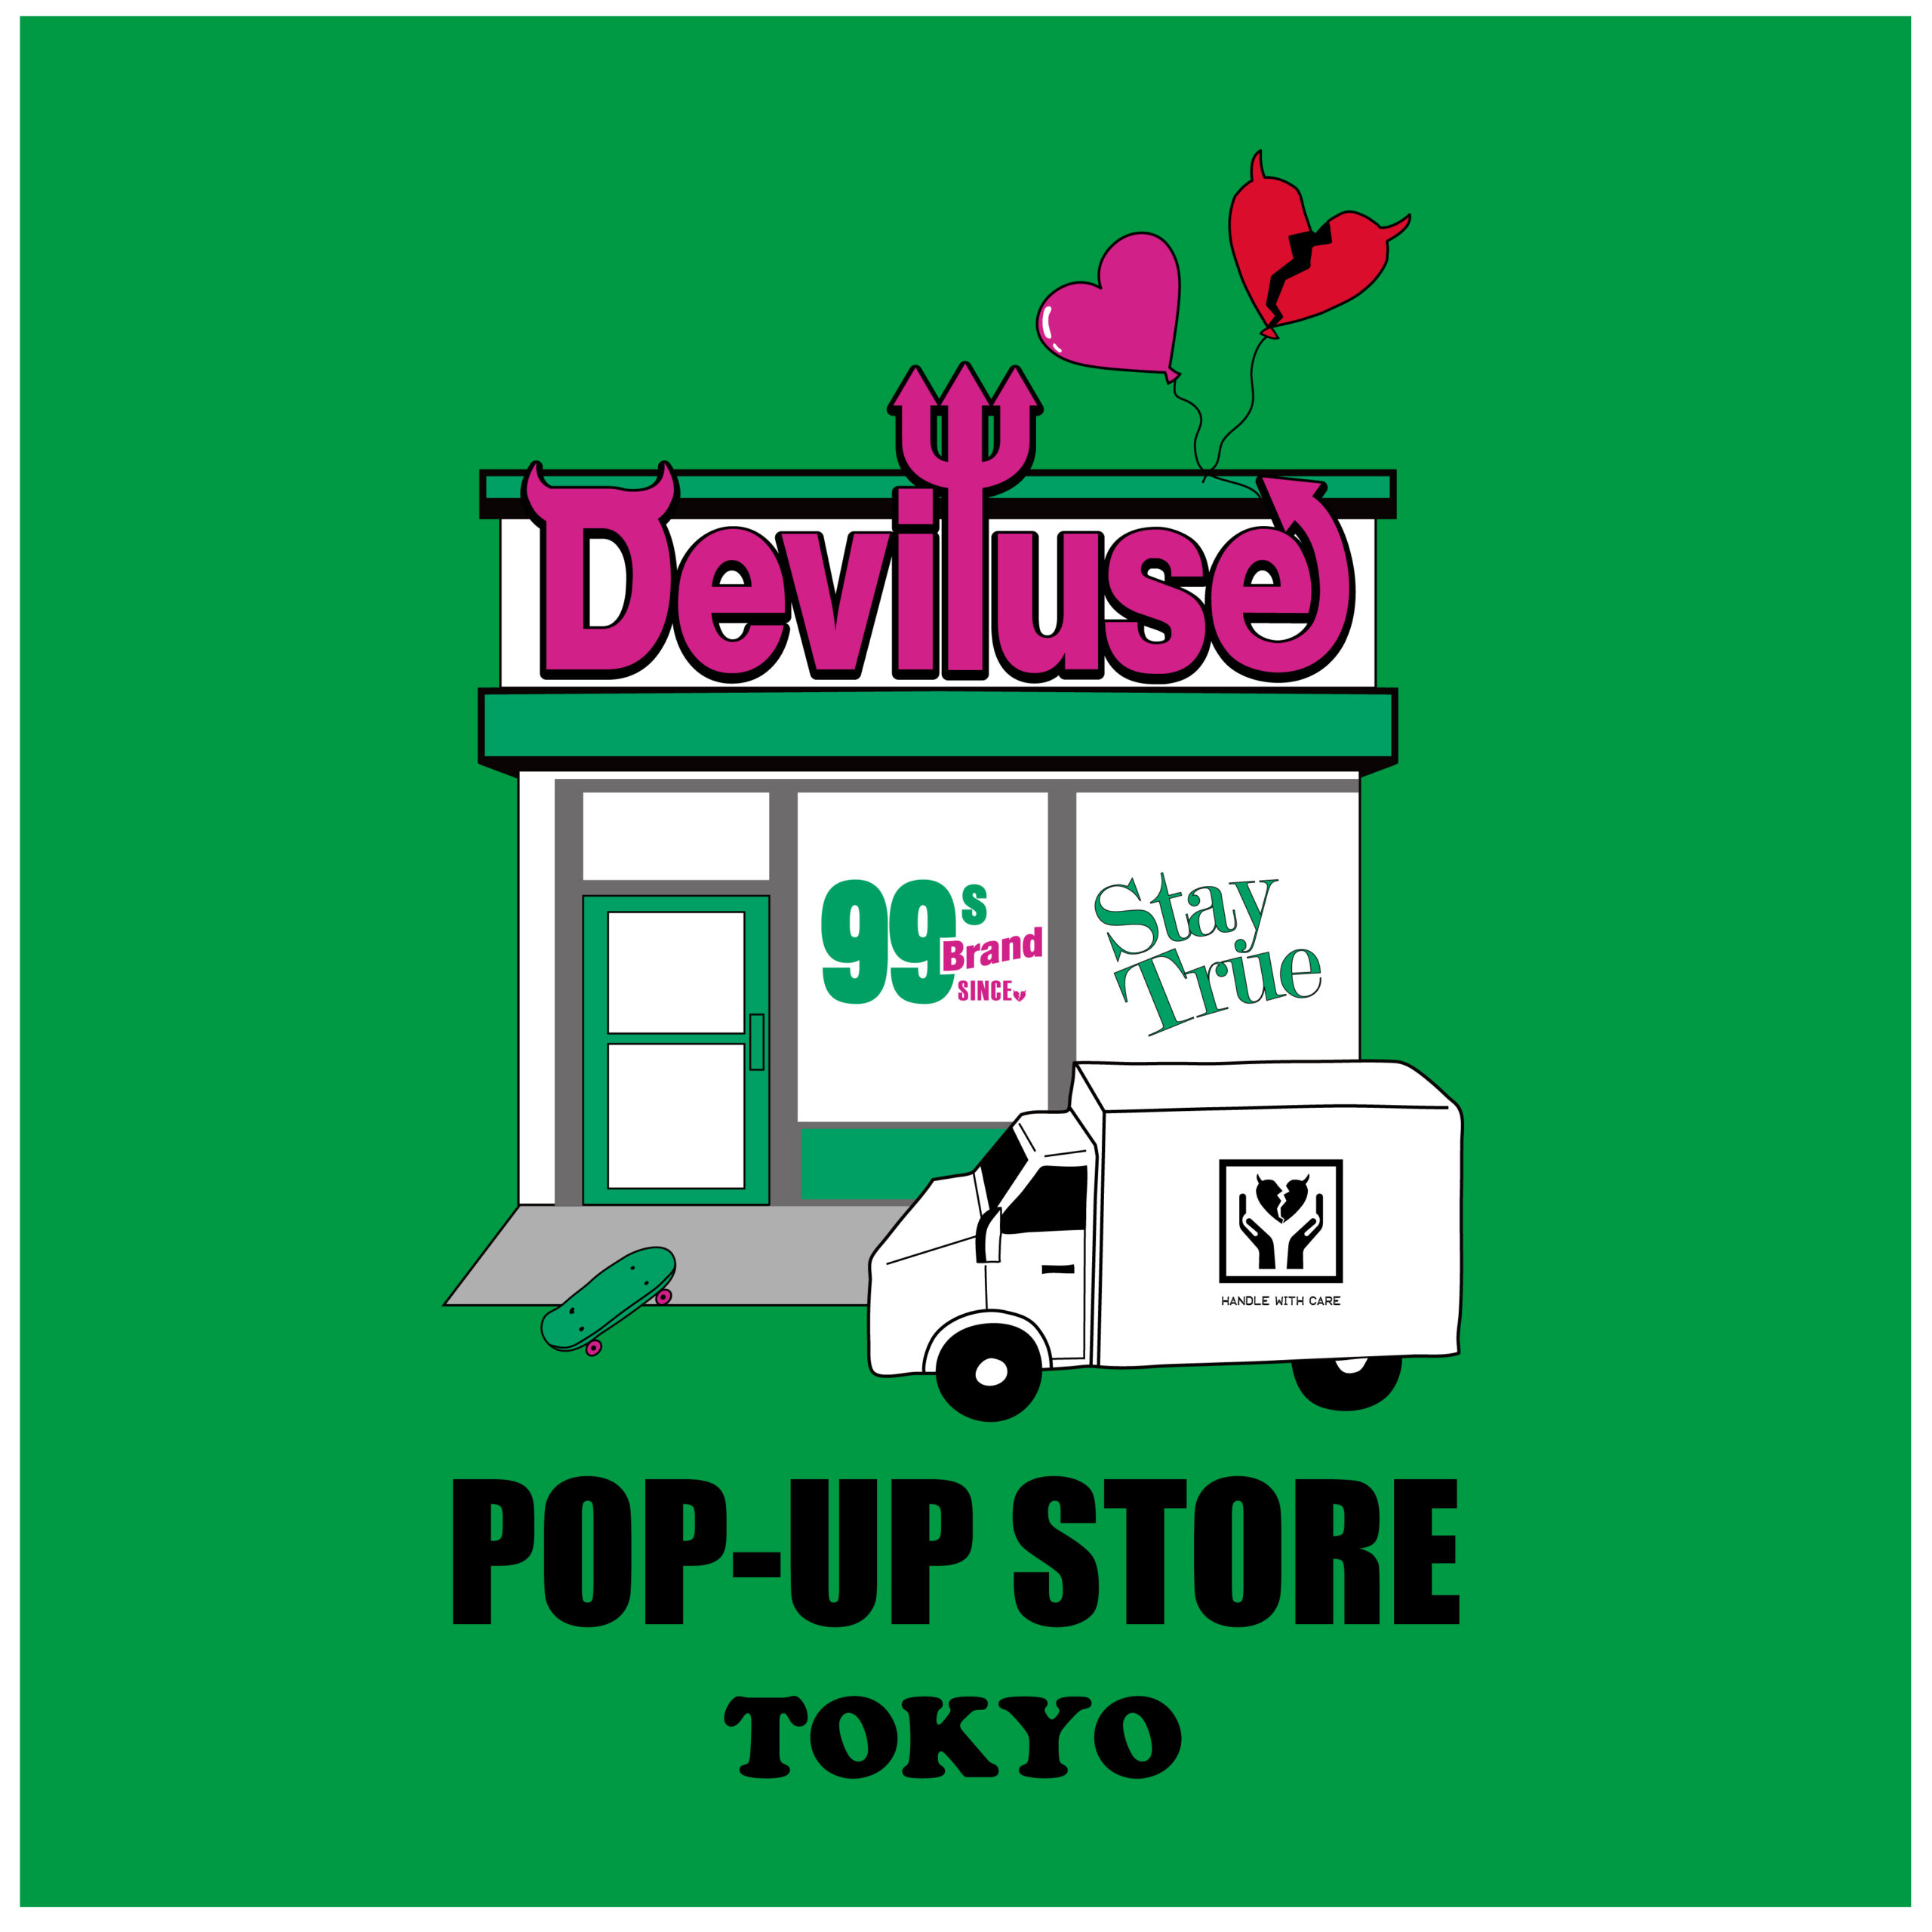 Deviluse POP-UP STORE TOKYO